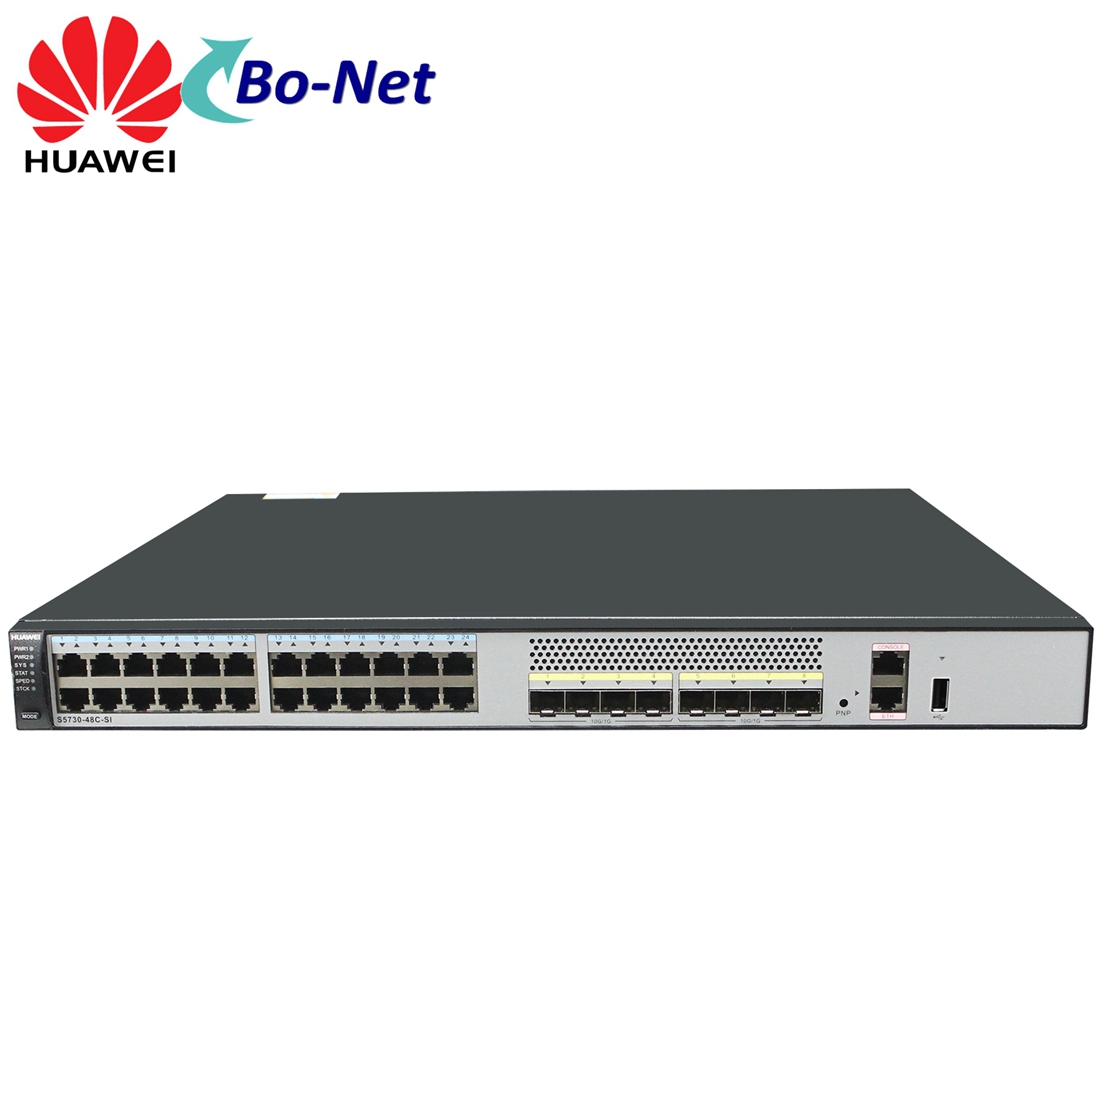 Huawei S5730-48C-SI-AC S5730 Switch 24 Port Gigabit Layer3 Switch, 8 10 Gig SFP+